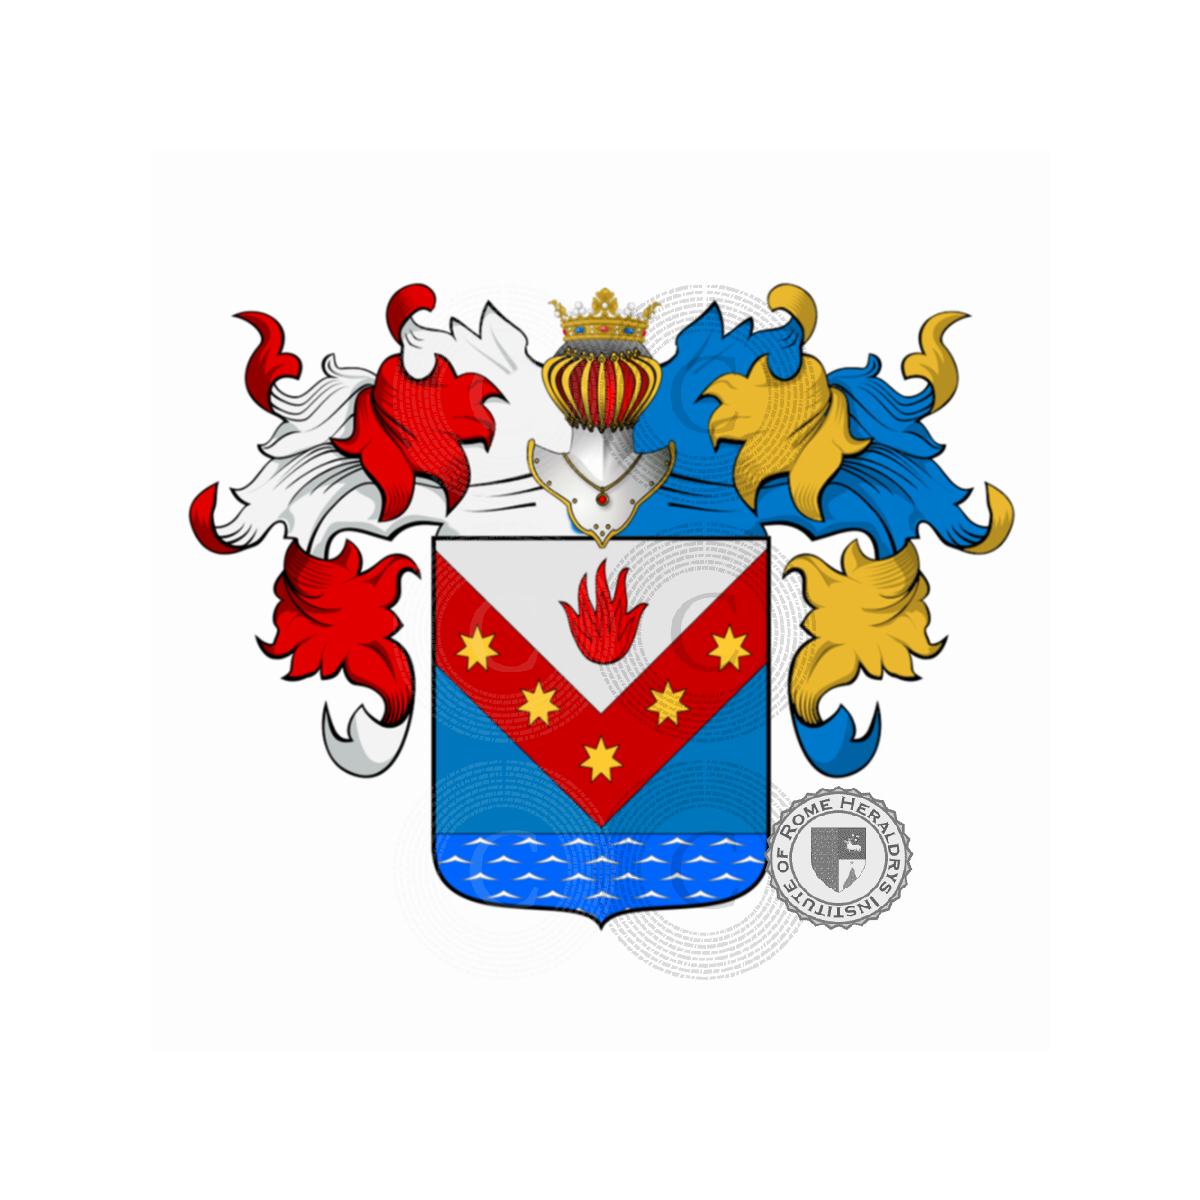 Coat of arms of familyVecchiarelli